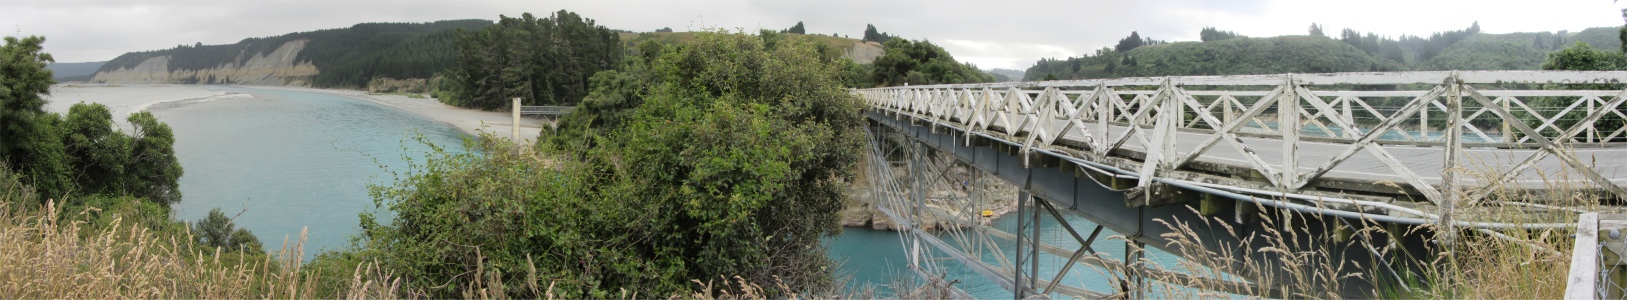 bridge_over_rakaia_river